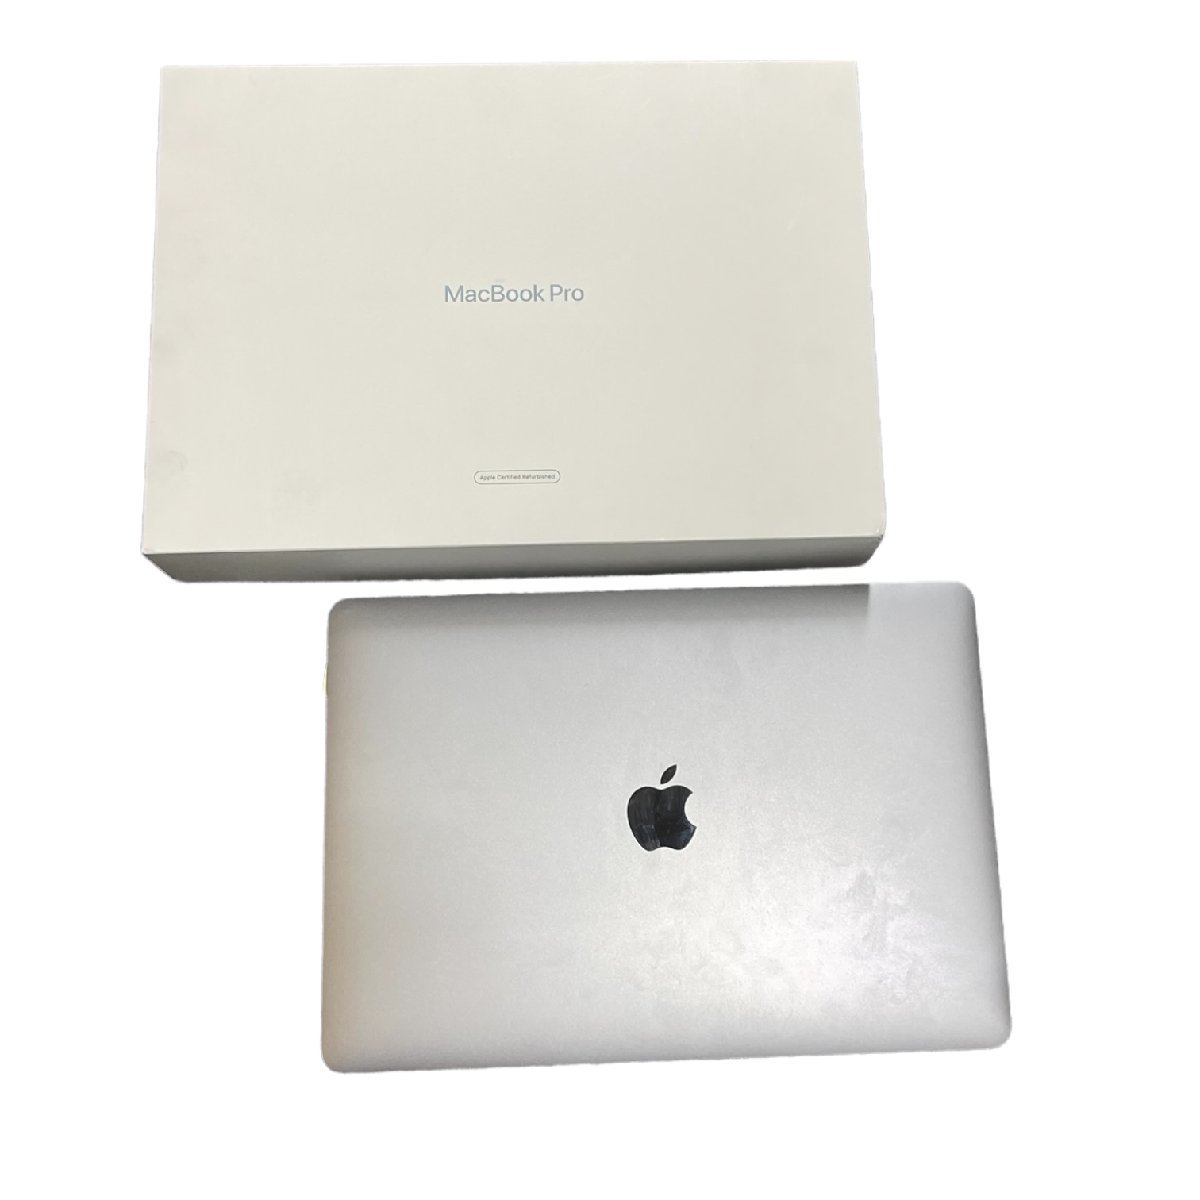 kyL1168RO【動作品】 初期化済み MacBook Pro 2019 A2159 13インチ メモリ16GB ストレージ256GB Core i5 動作品 マックブックプロ